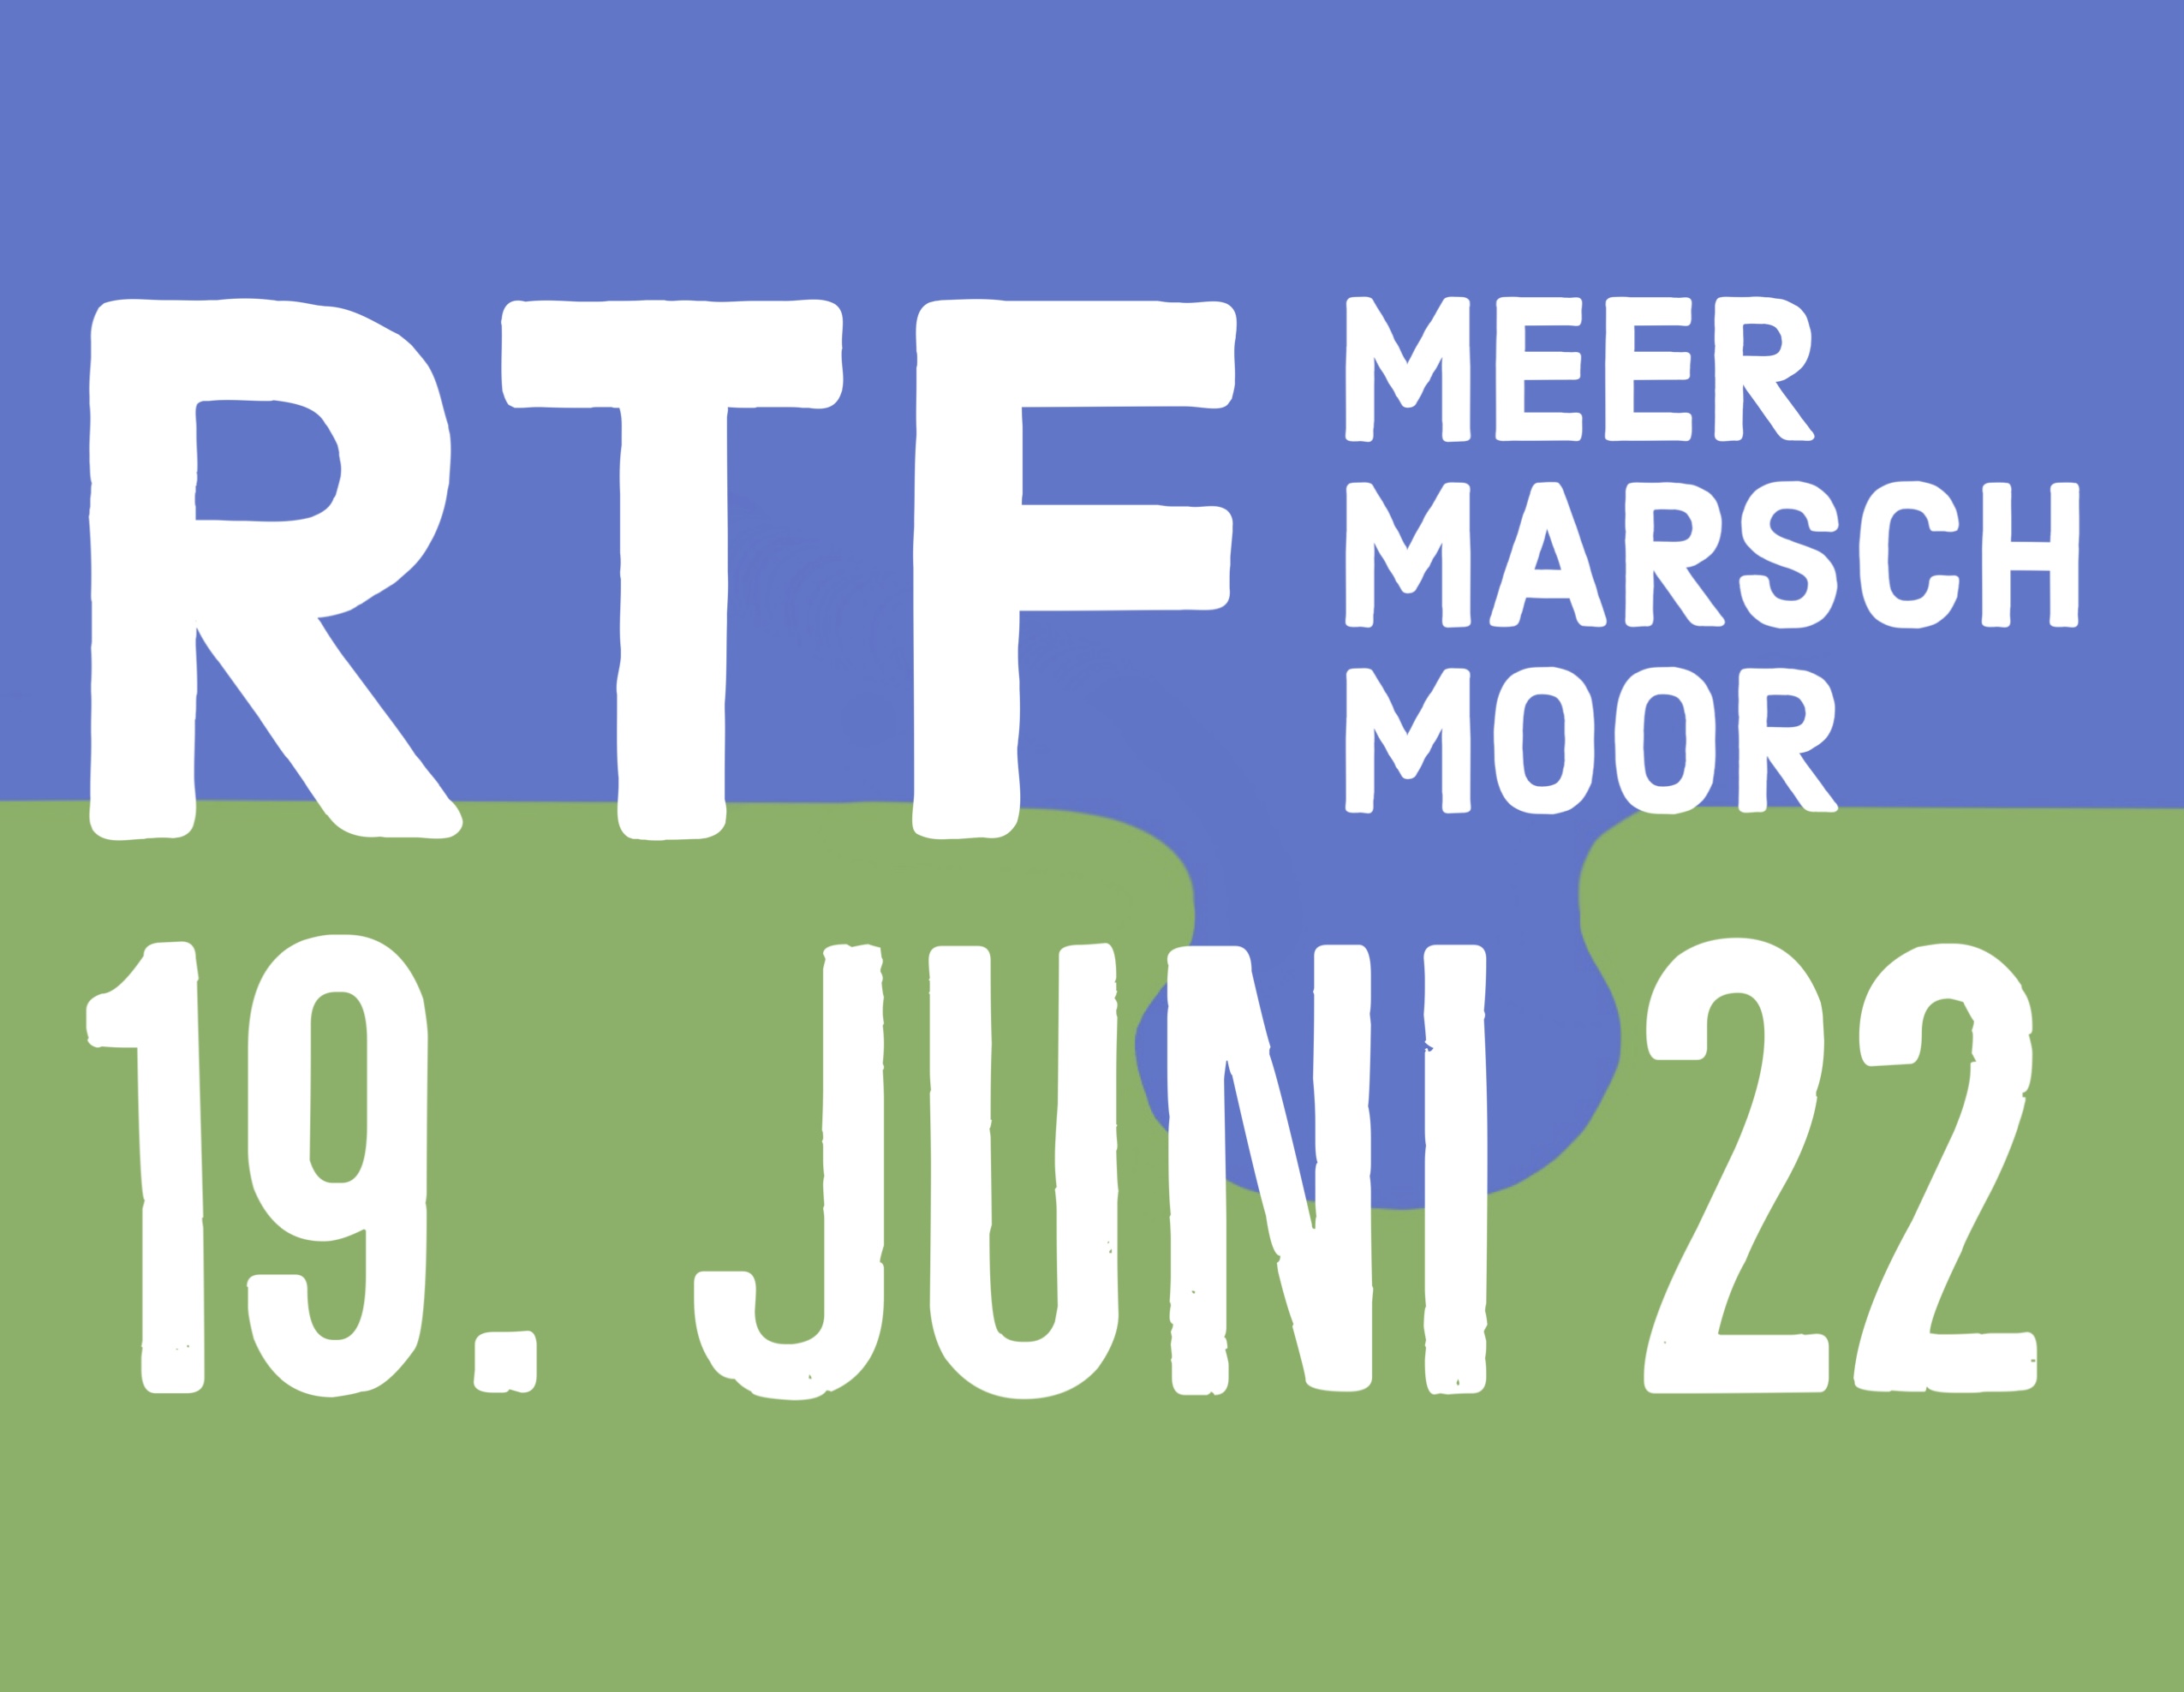 You are currently viewing RTF zwischen Meer, Marsch und Moor